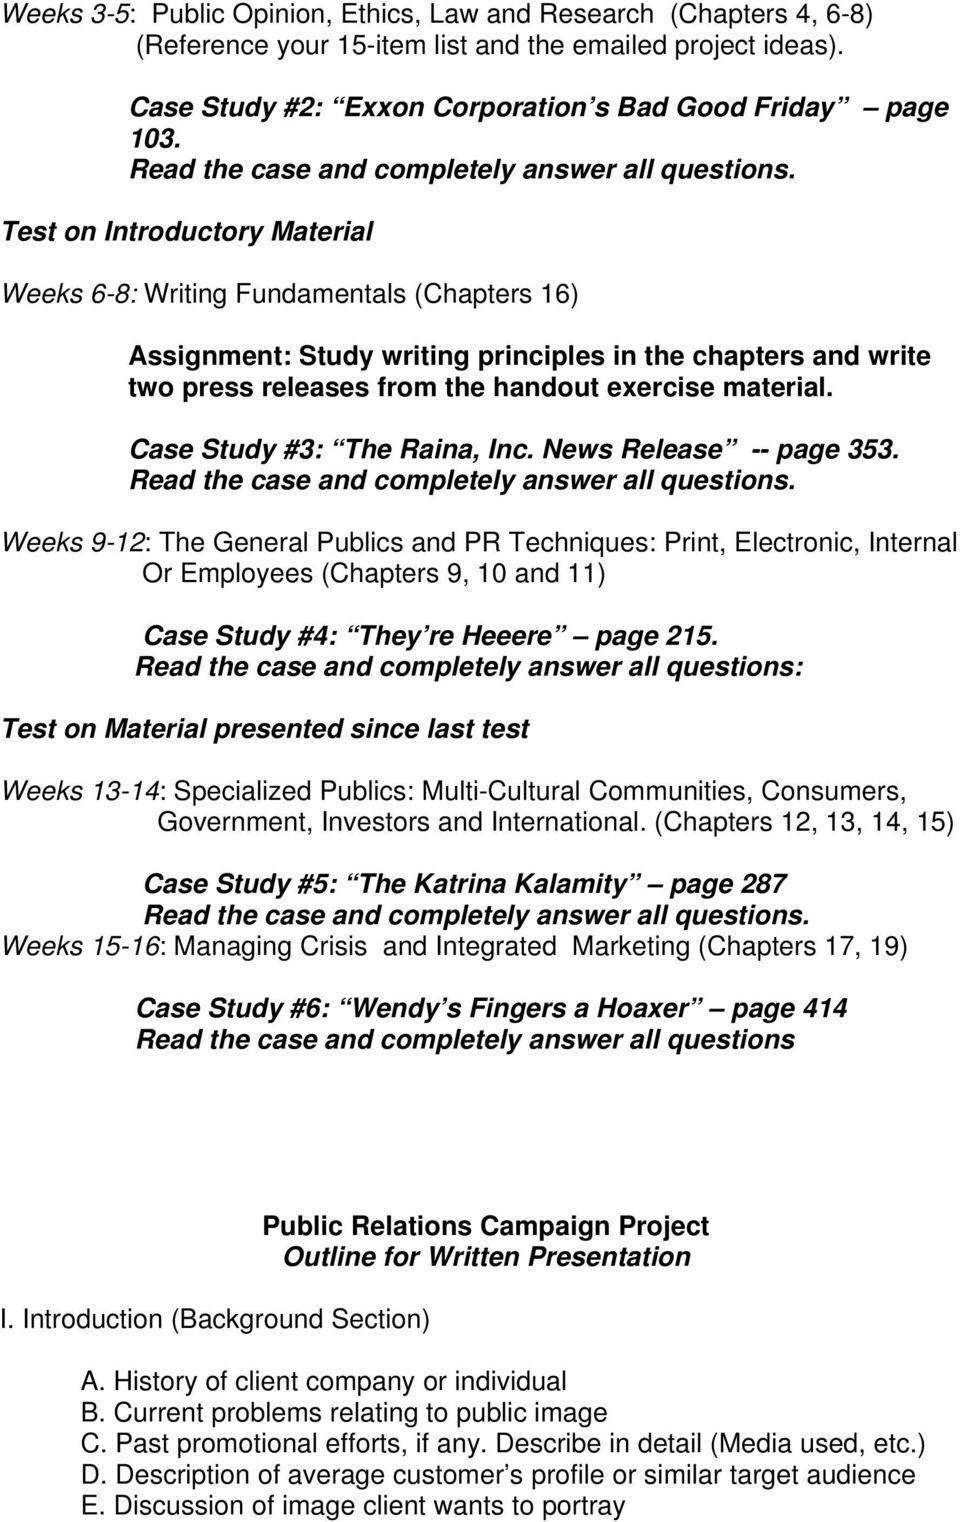 Case Study #3: The Raina, Inc. News Release -- page 353.